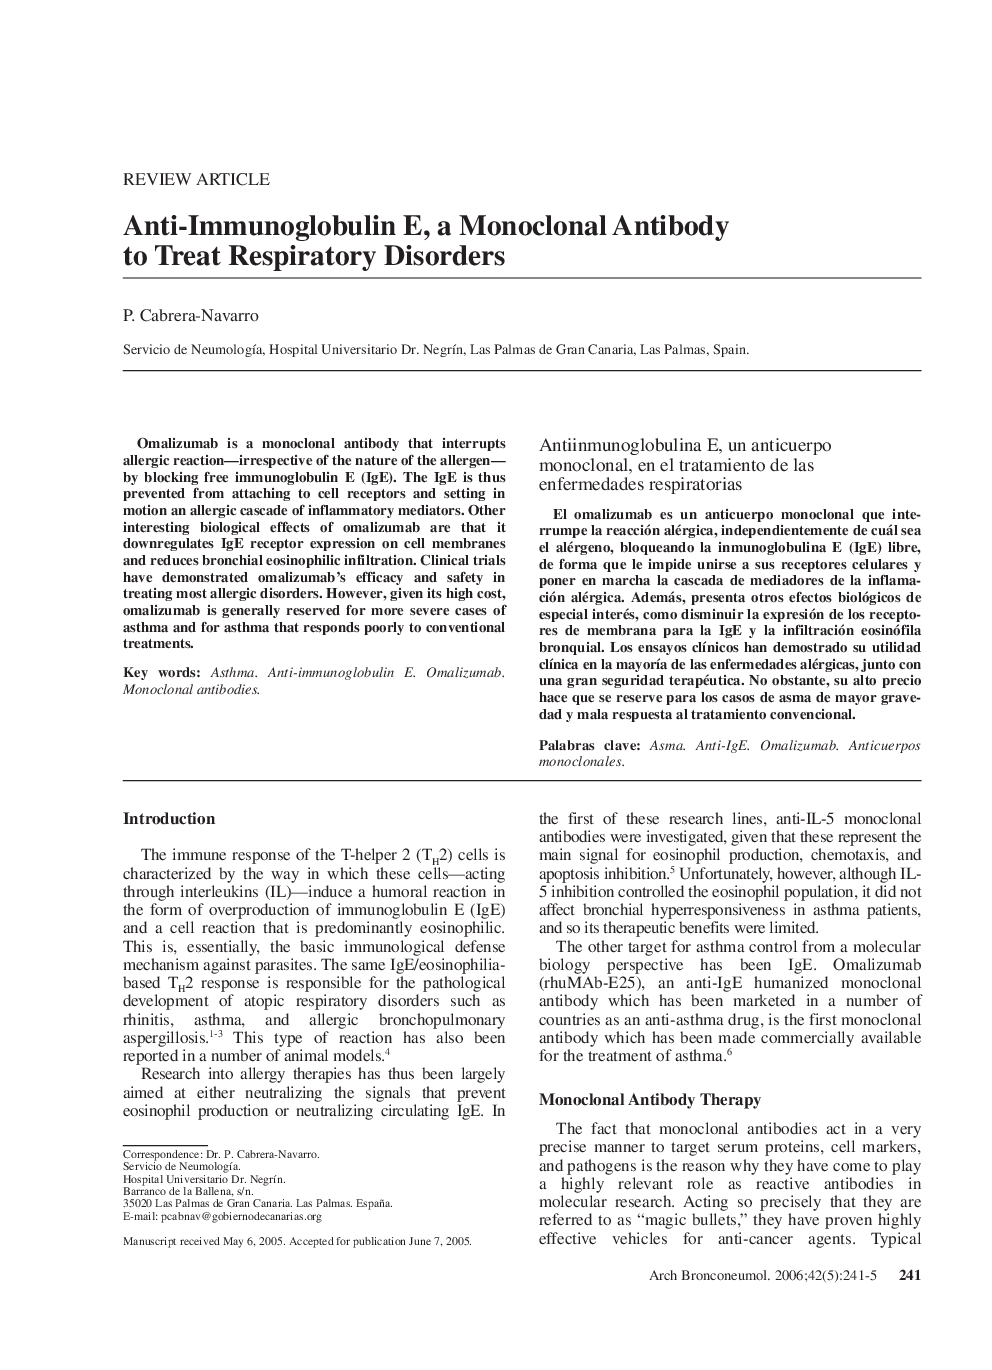 Anti-Immunoglobulin E, a Monoclonal Antibody to Treat Respiratory Disorders